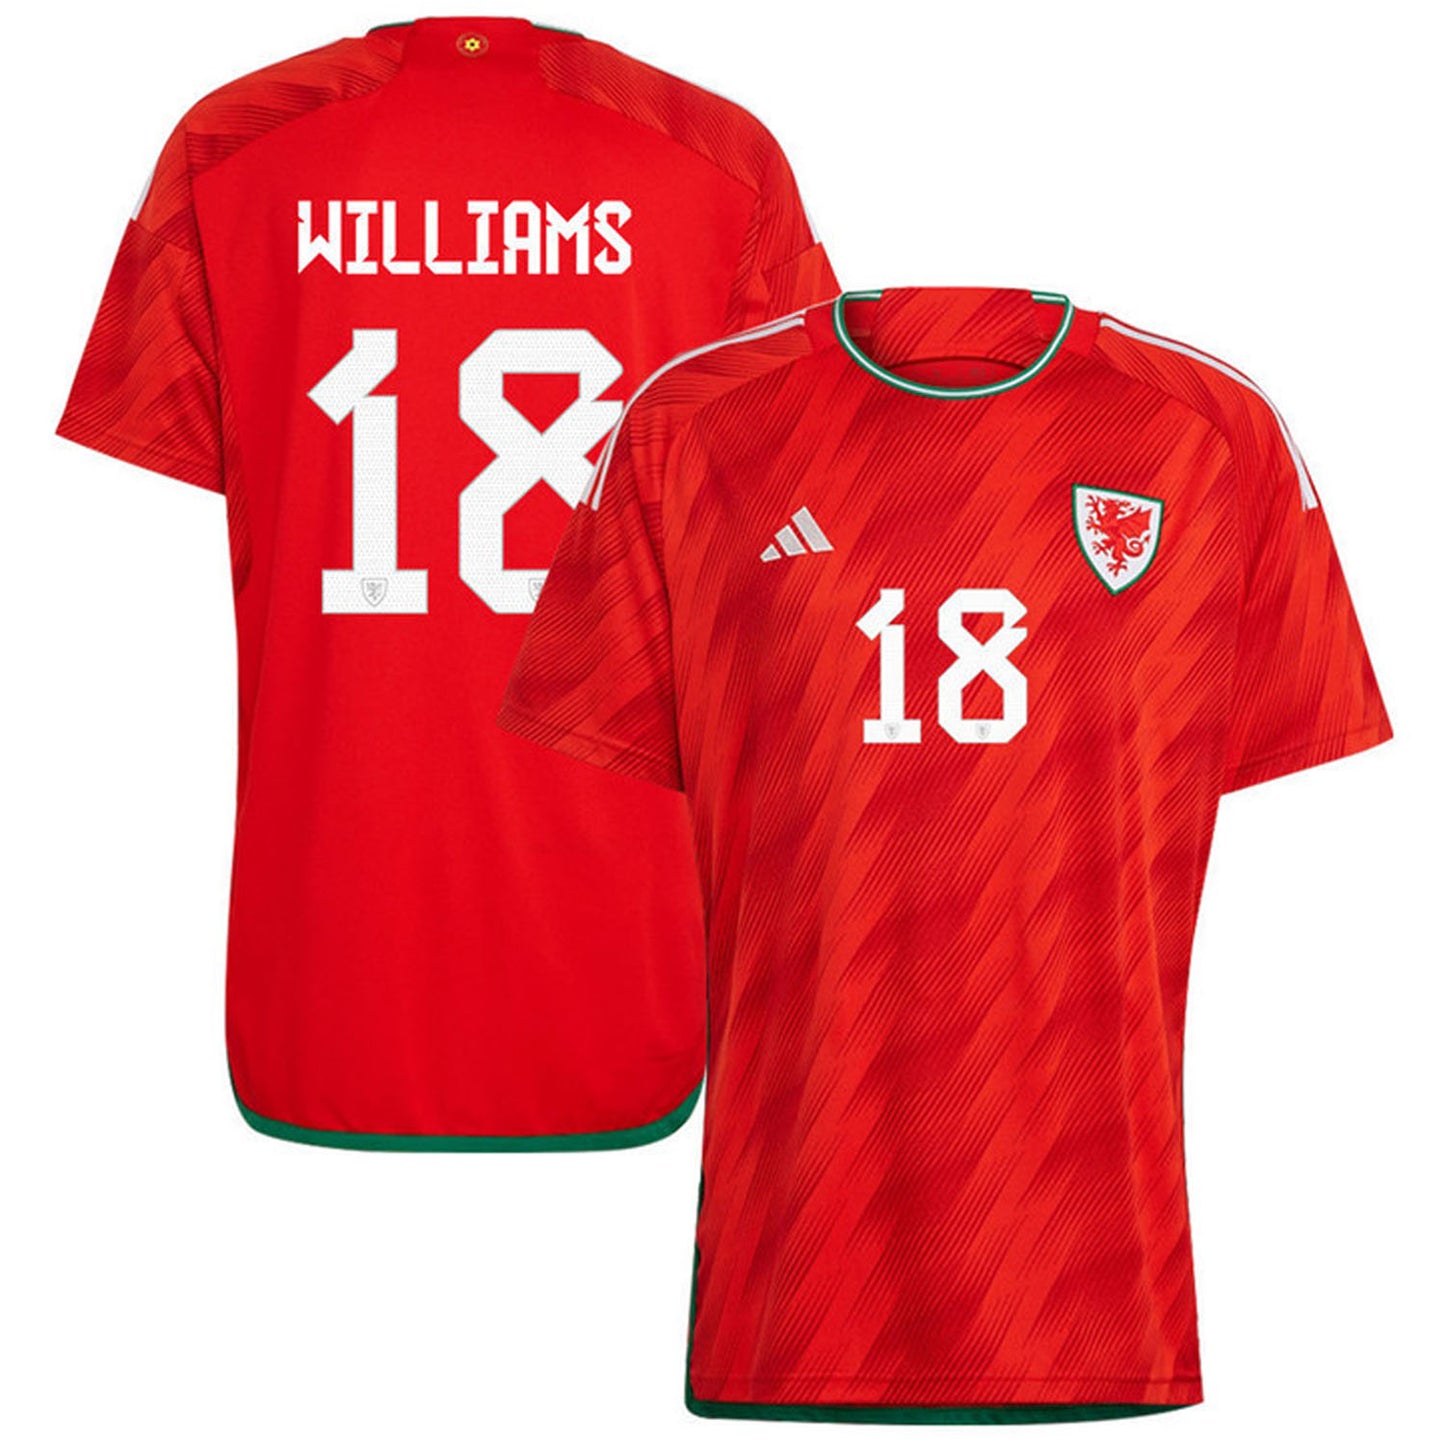 Jonny Williams Wales 18 Fifa World Cup Jersey